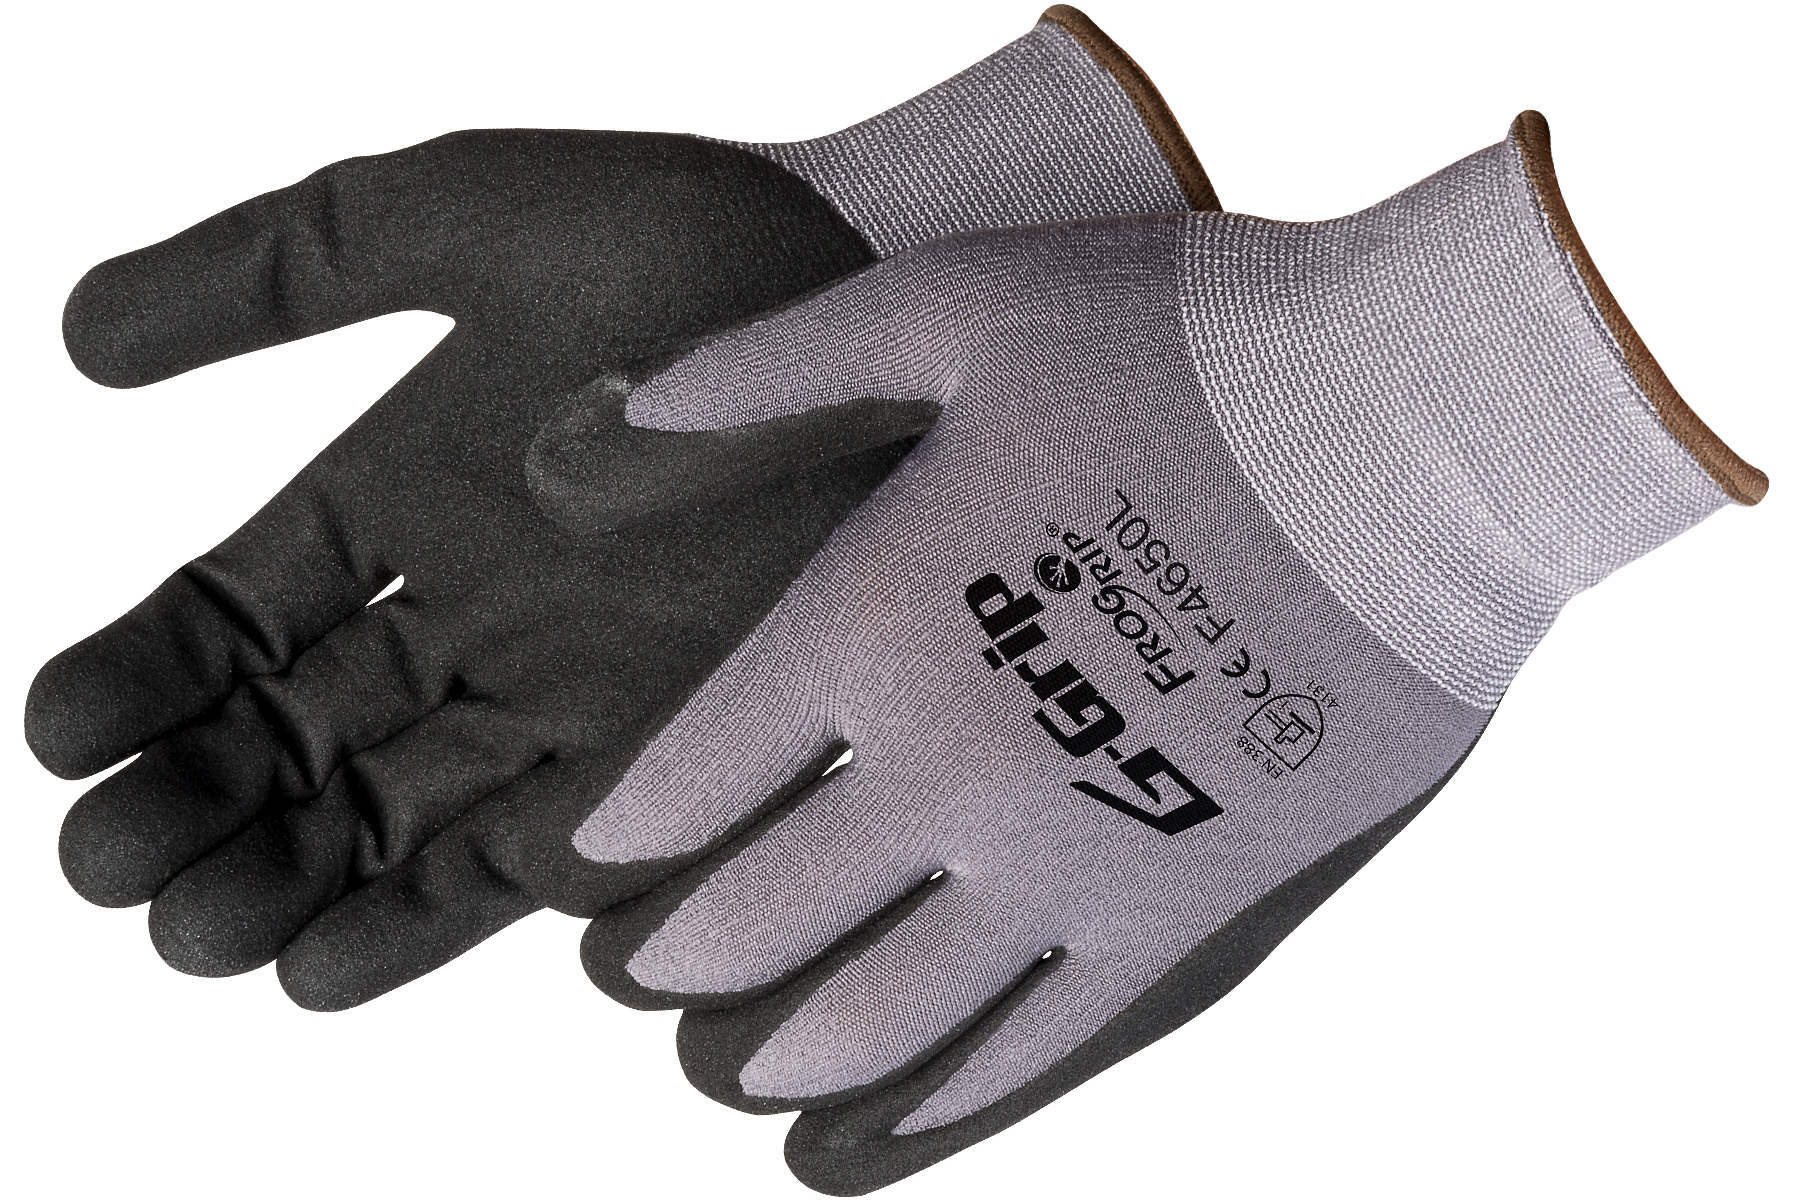 Liberty F4650 Nylon Shell Nitrile Palm G-Grip Work Glove